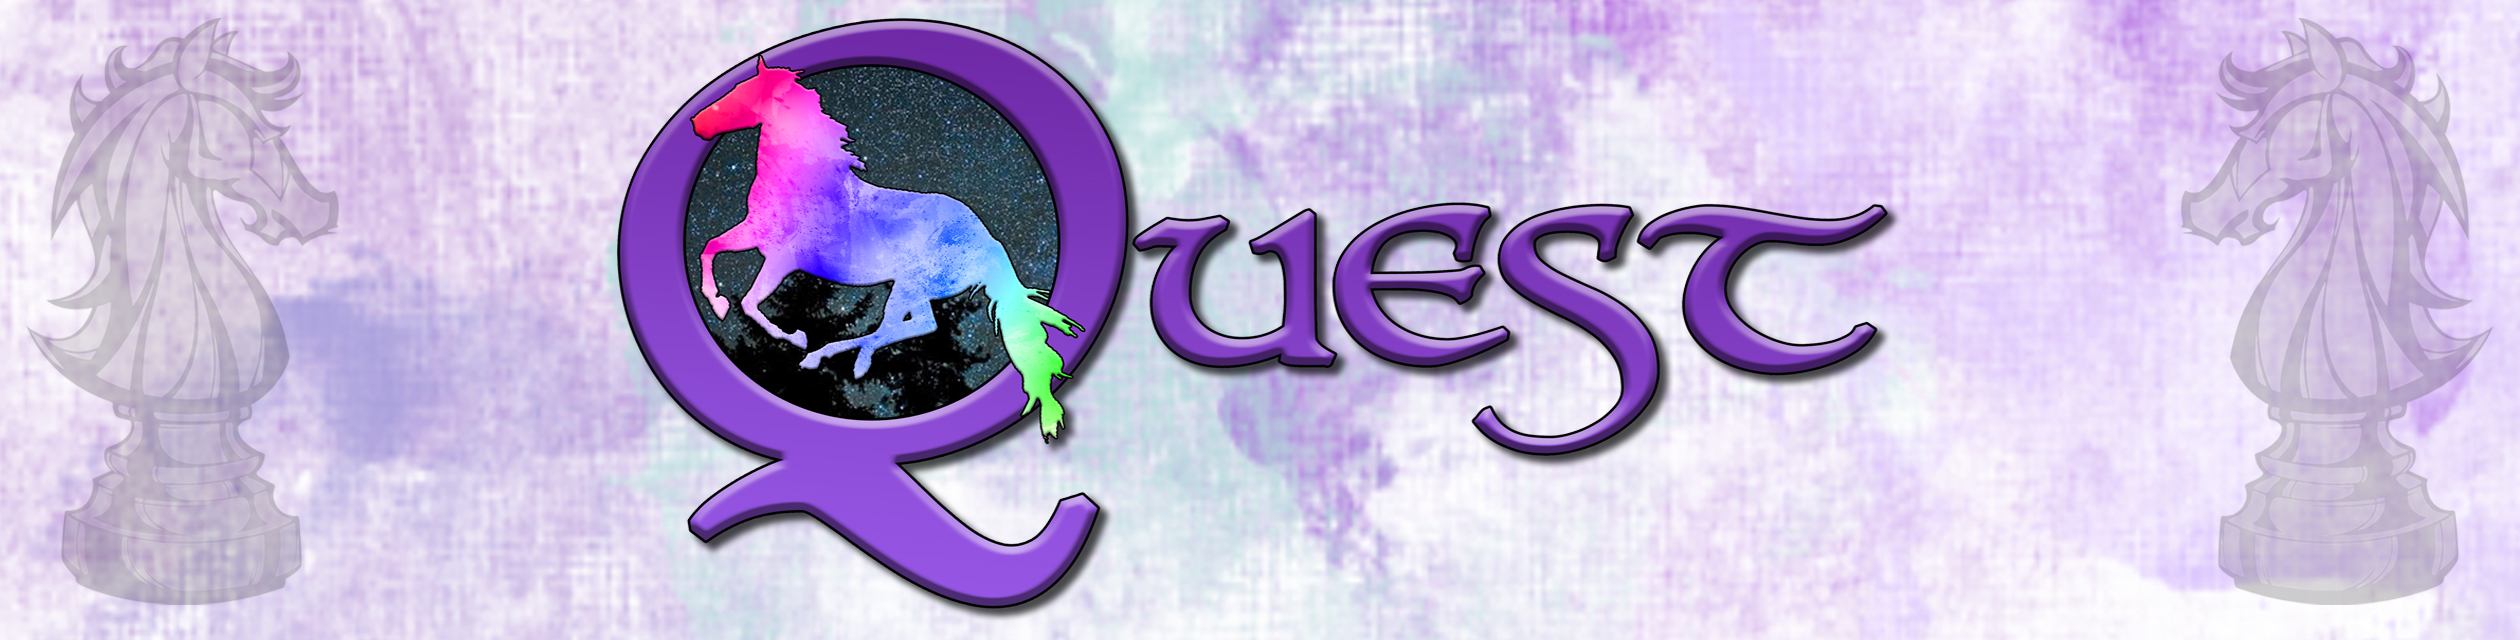 Quest school logo